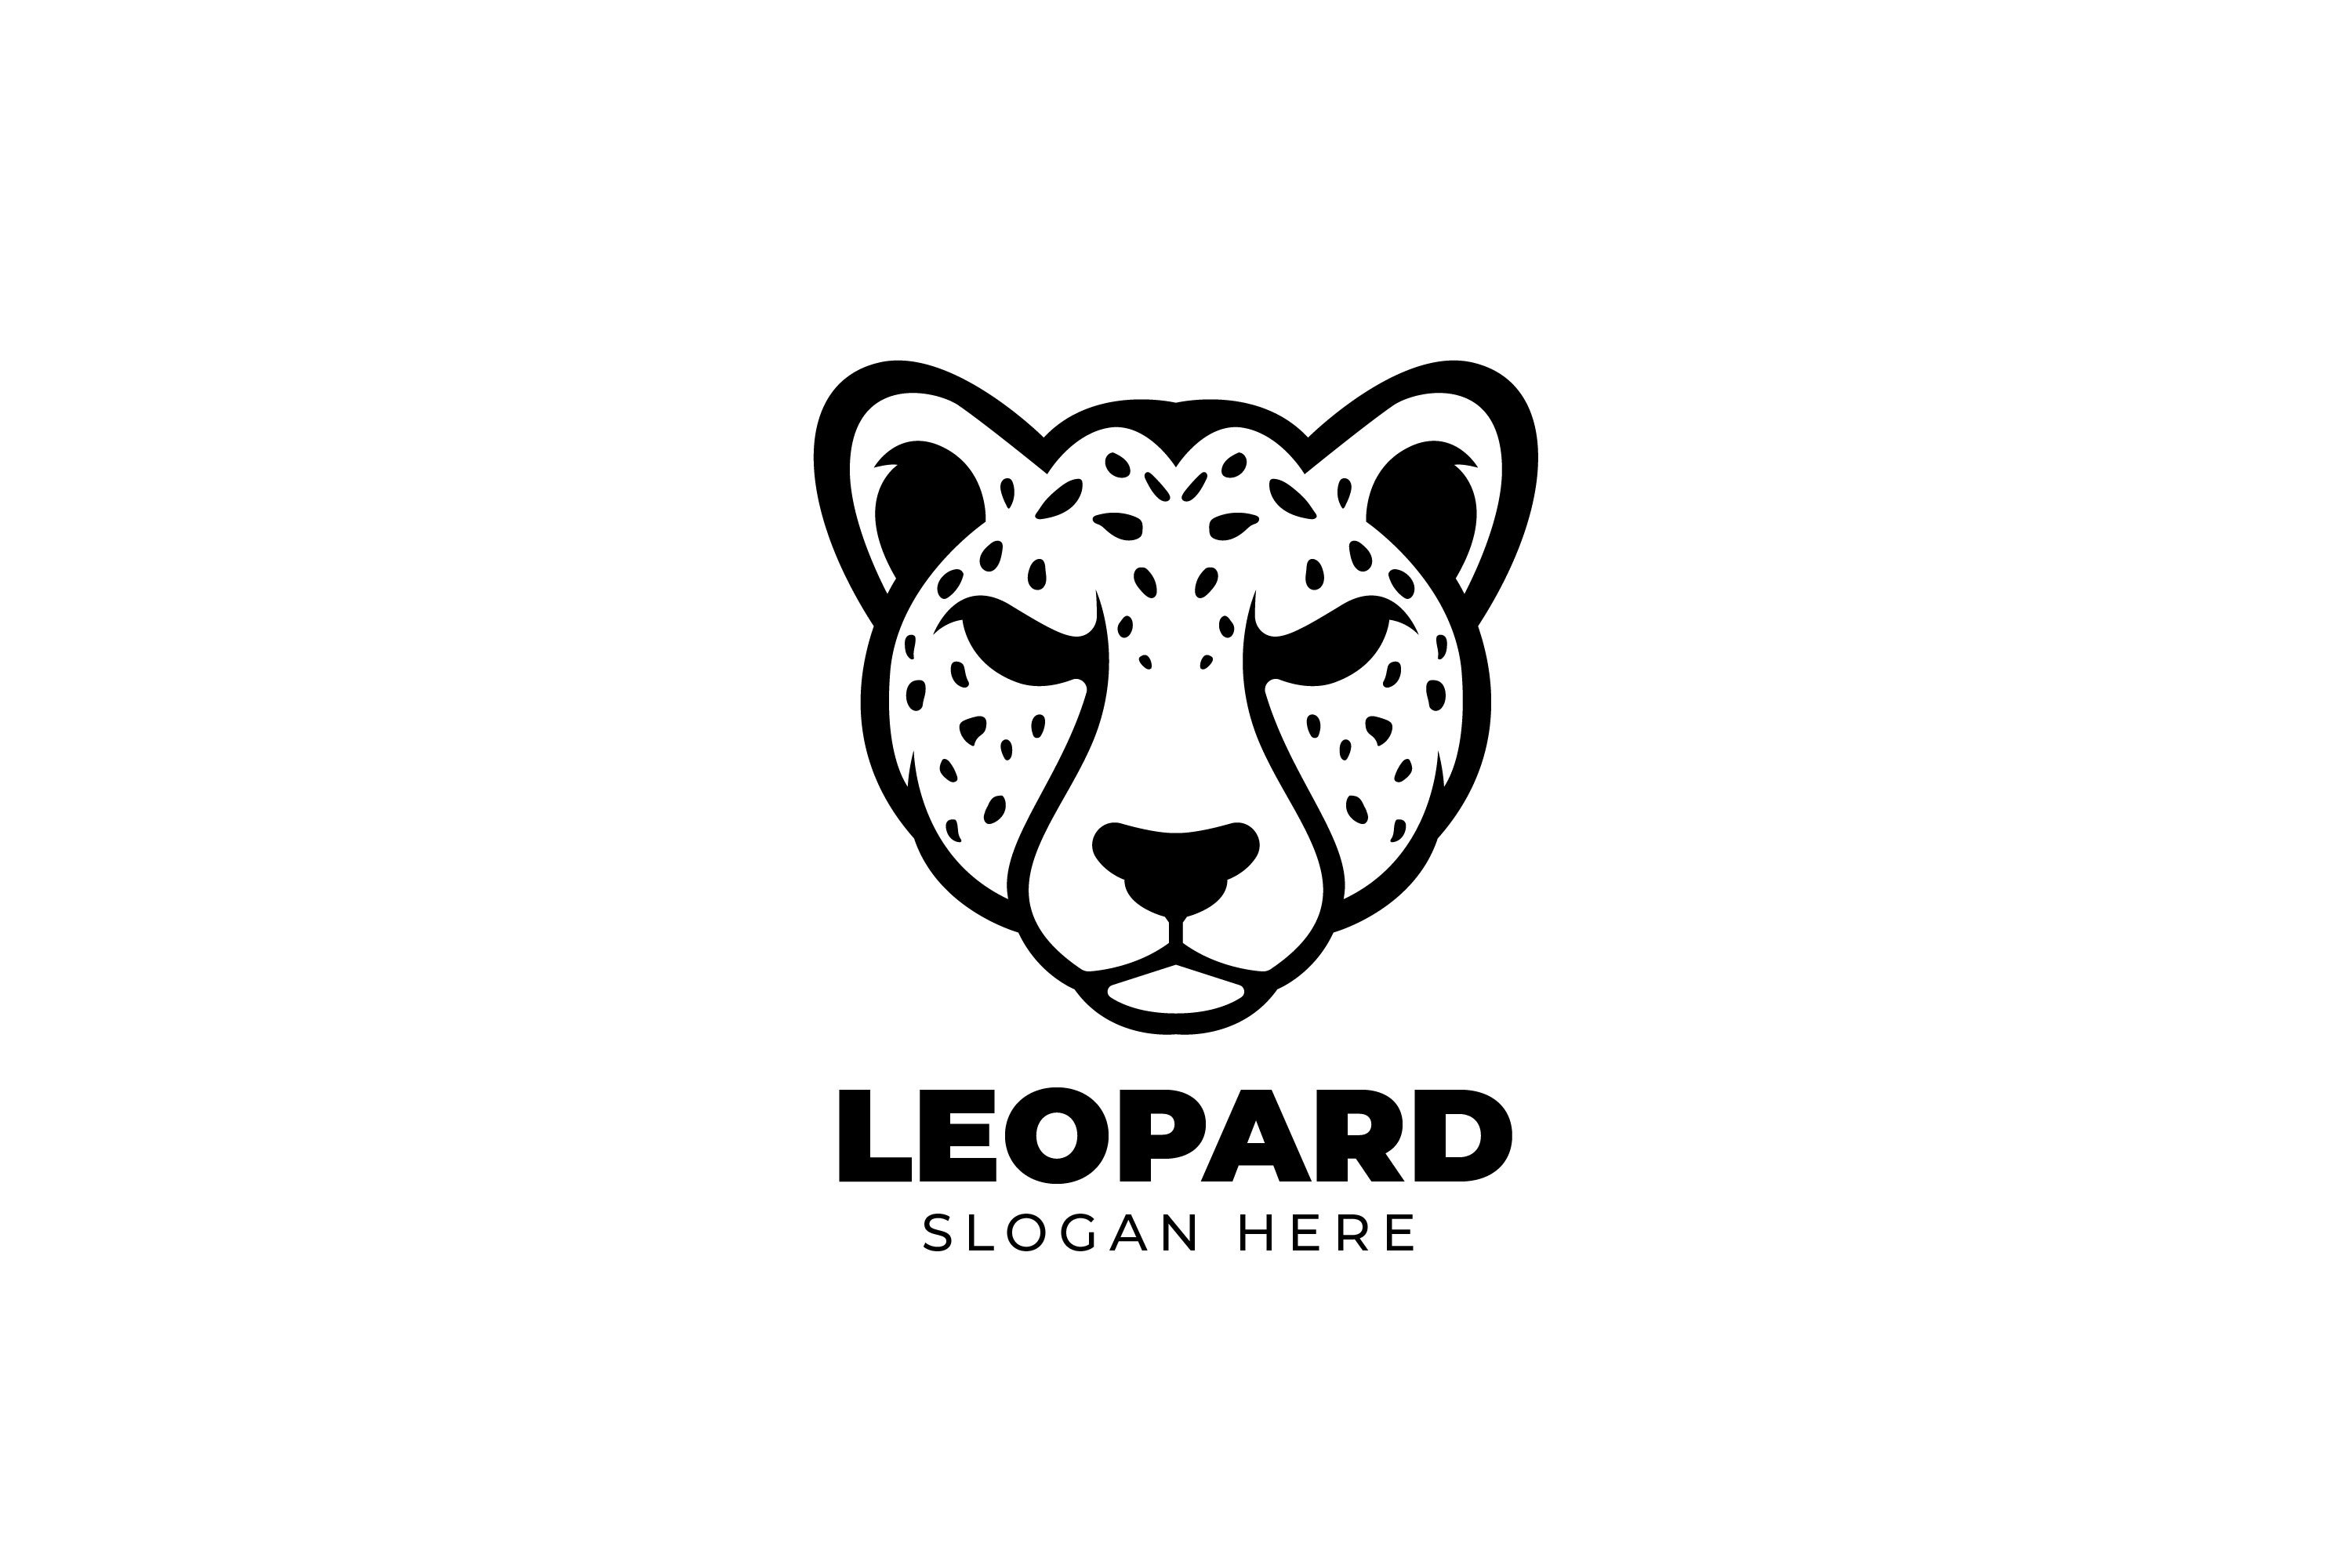 Leopard Logo cover image.